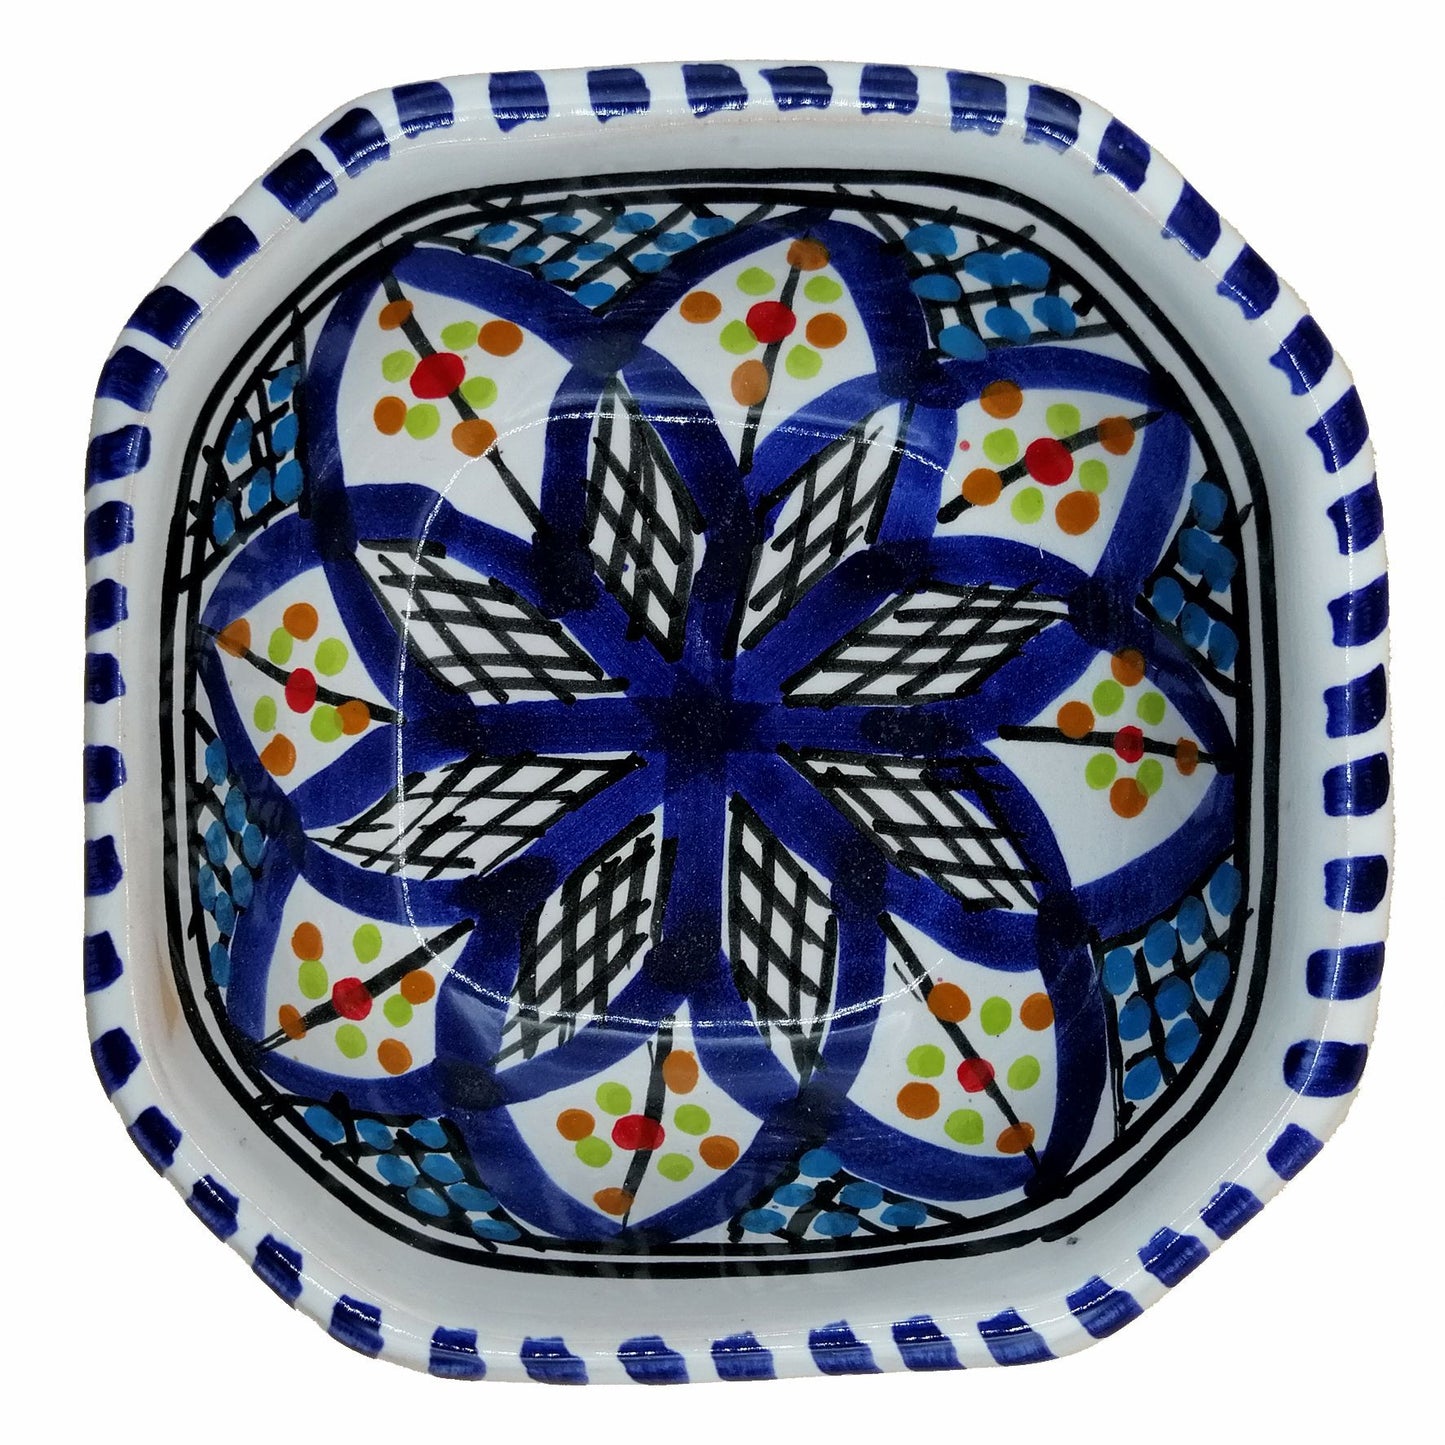 Arredo Etnico Ciotola Salse Zuppa Marocchina Tunisina Ceramica 0611201113